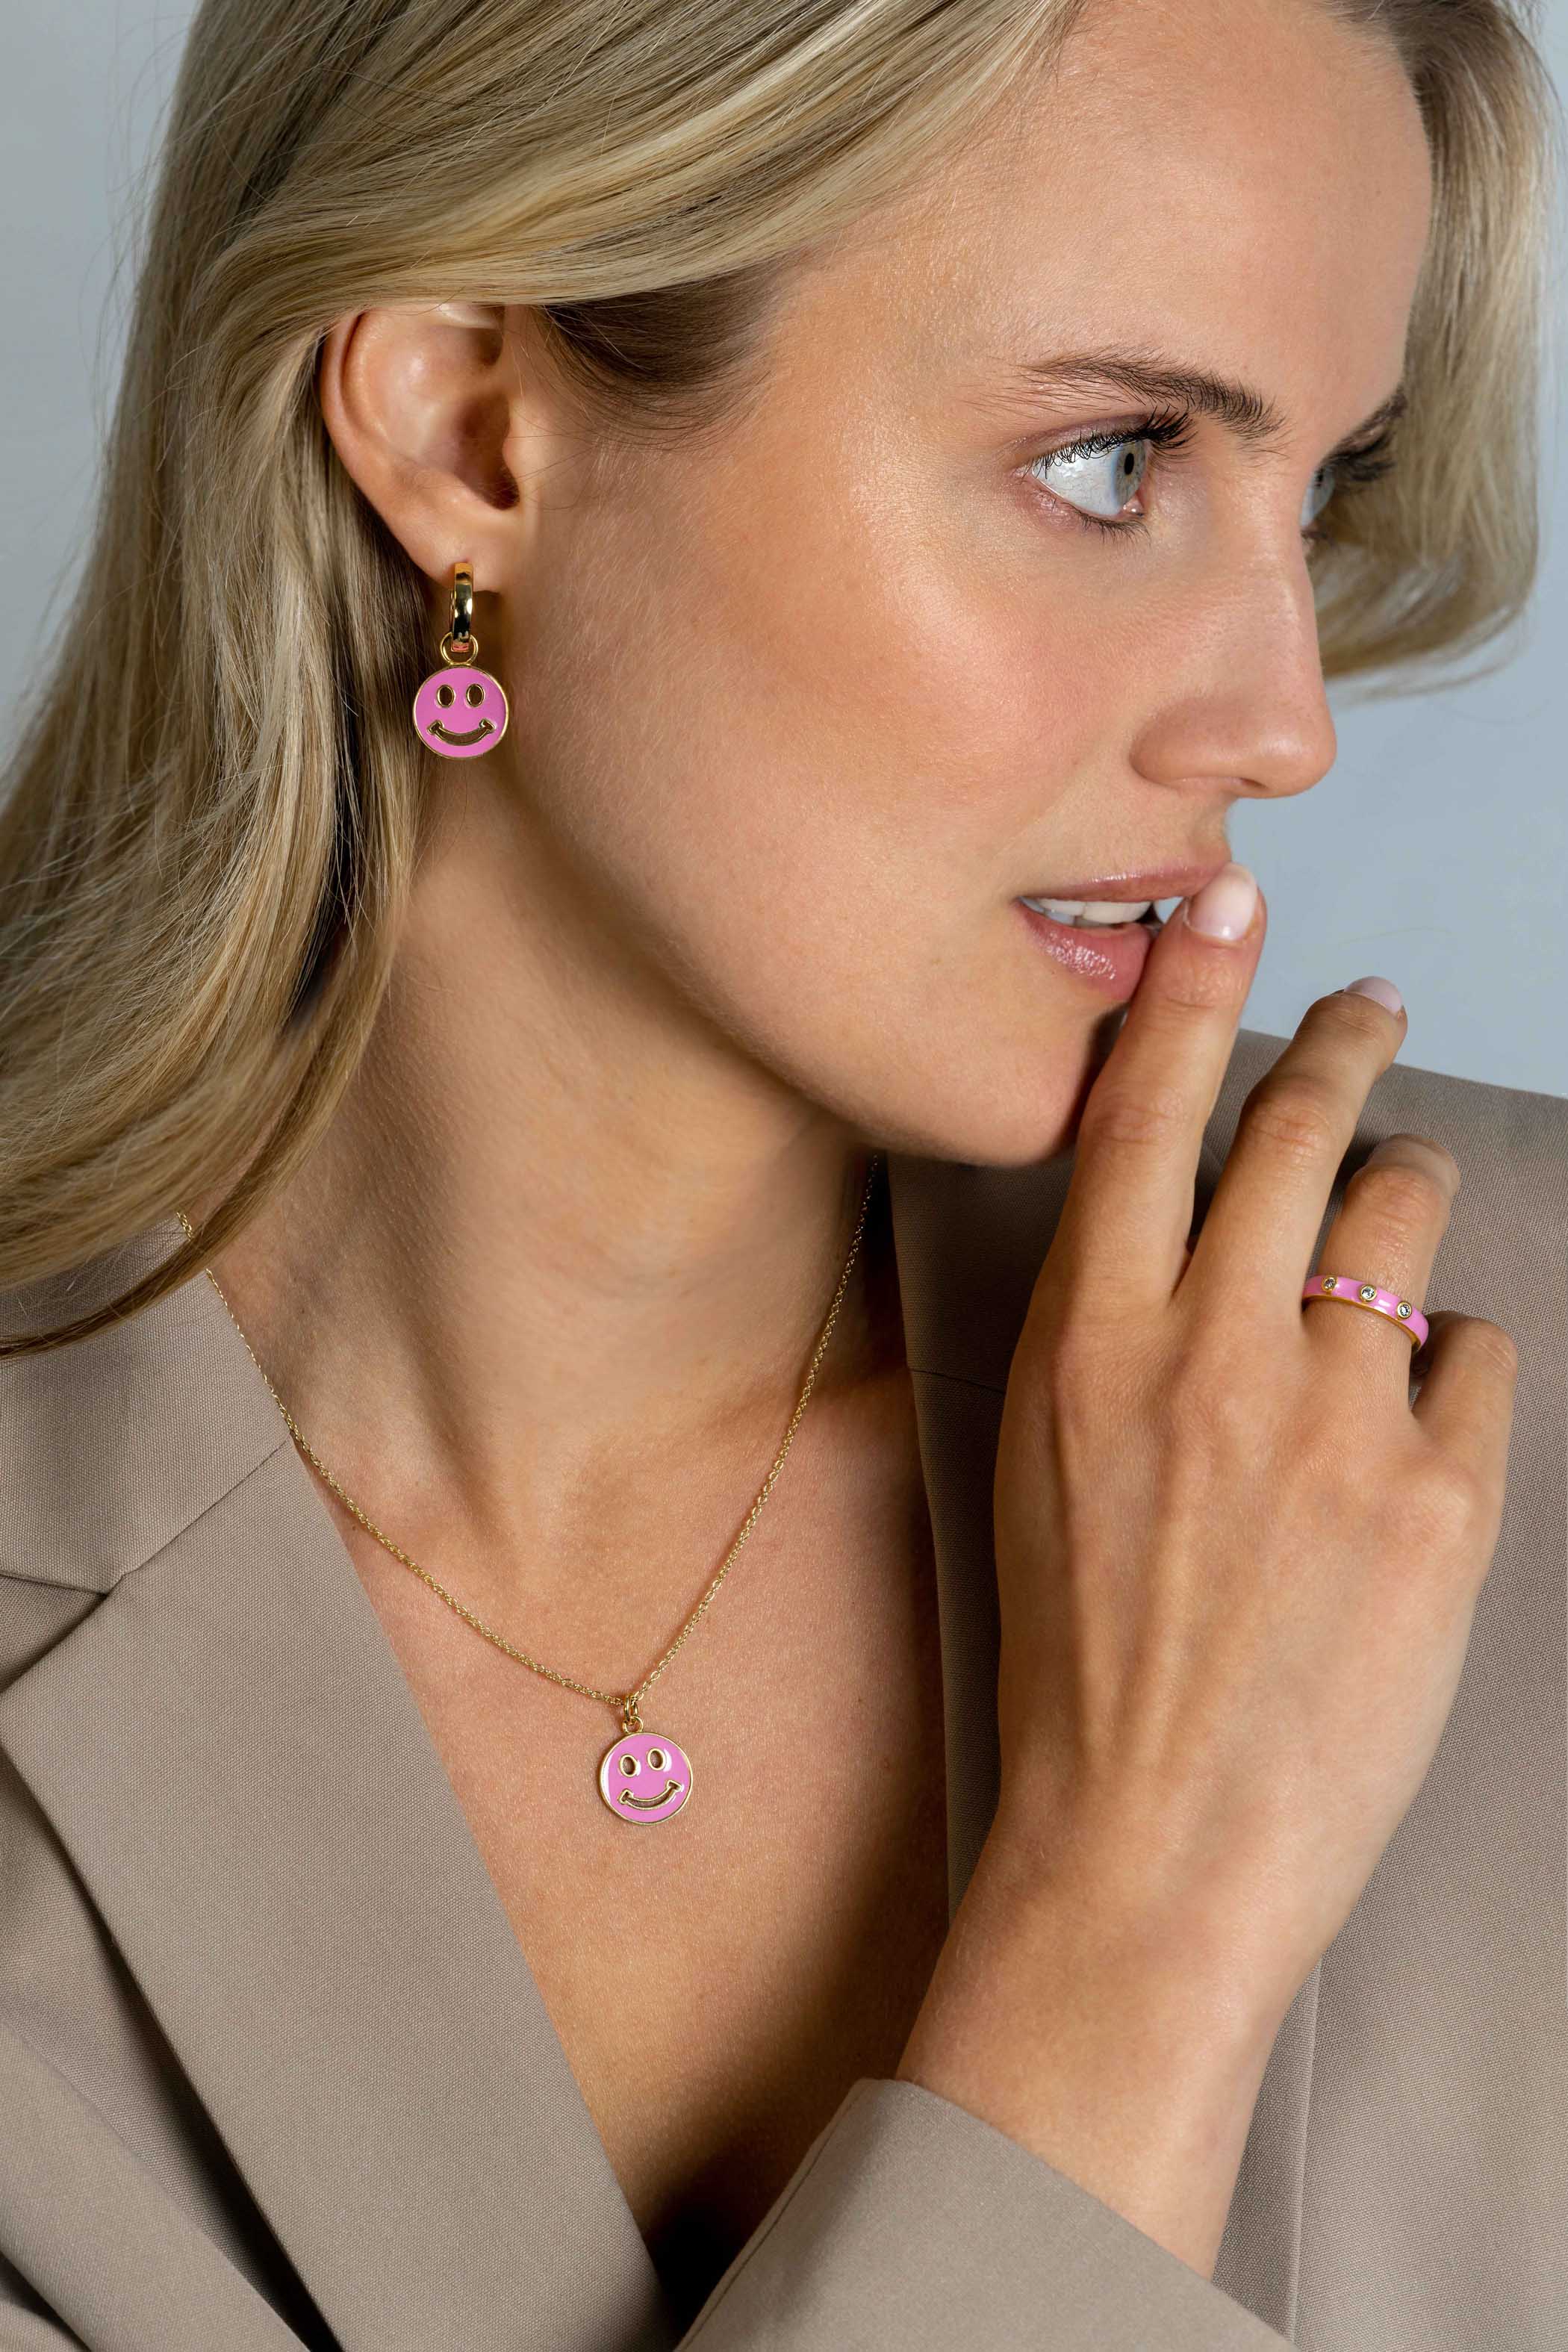 15mm ZINZI Gold Plated Sterling Silver Earrings Pendants Round Smiley in Trendy Pink Enamel ZICH2313R (excl. hoop earrings)